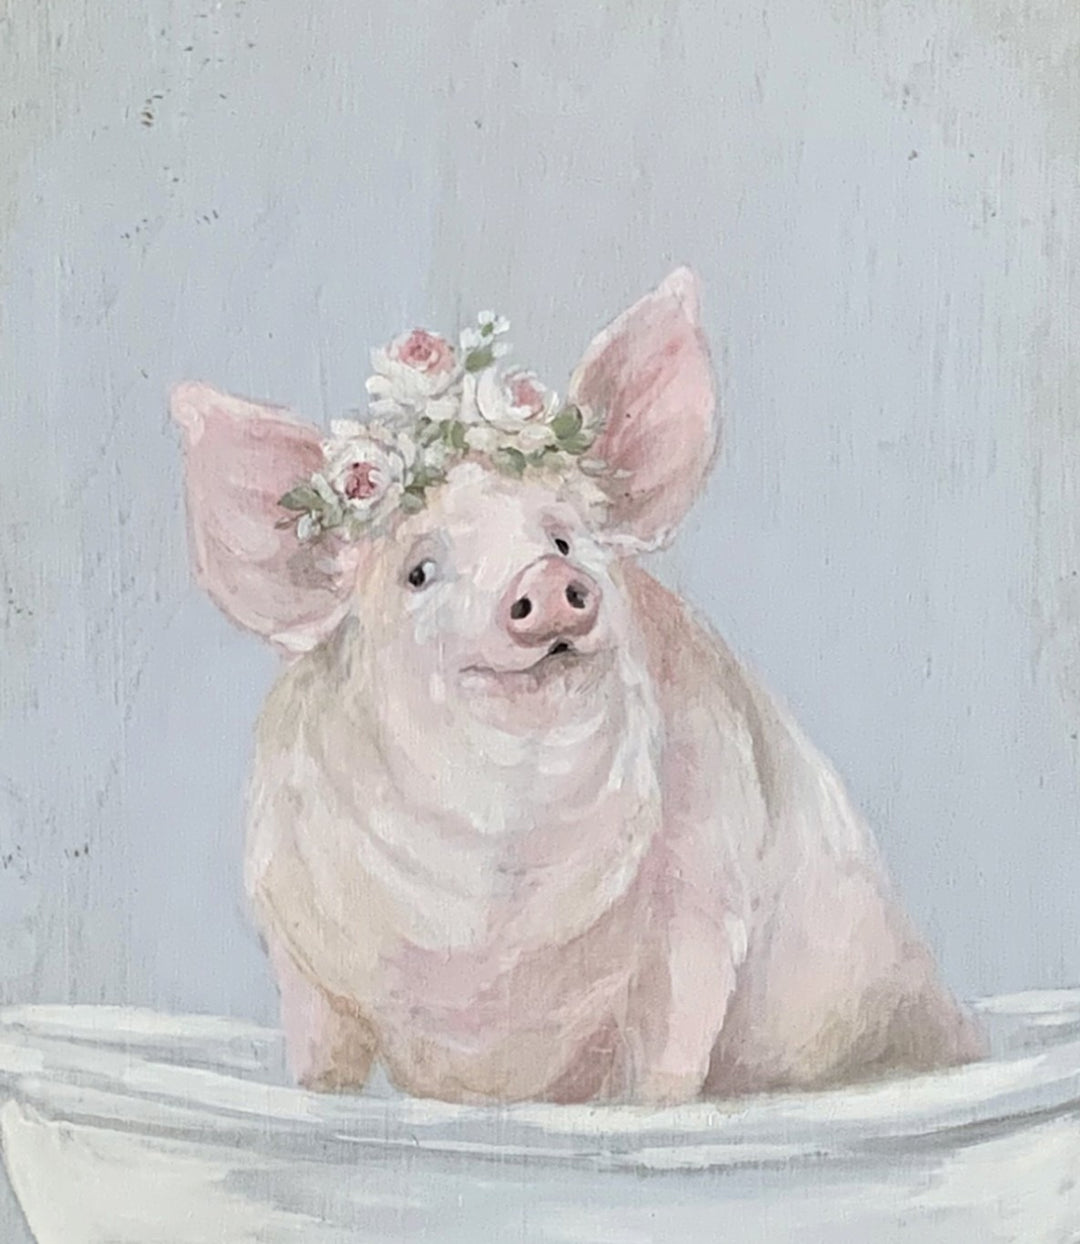 "Pig In A Tub" Framed Wood Print